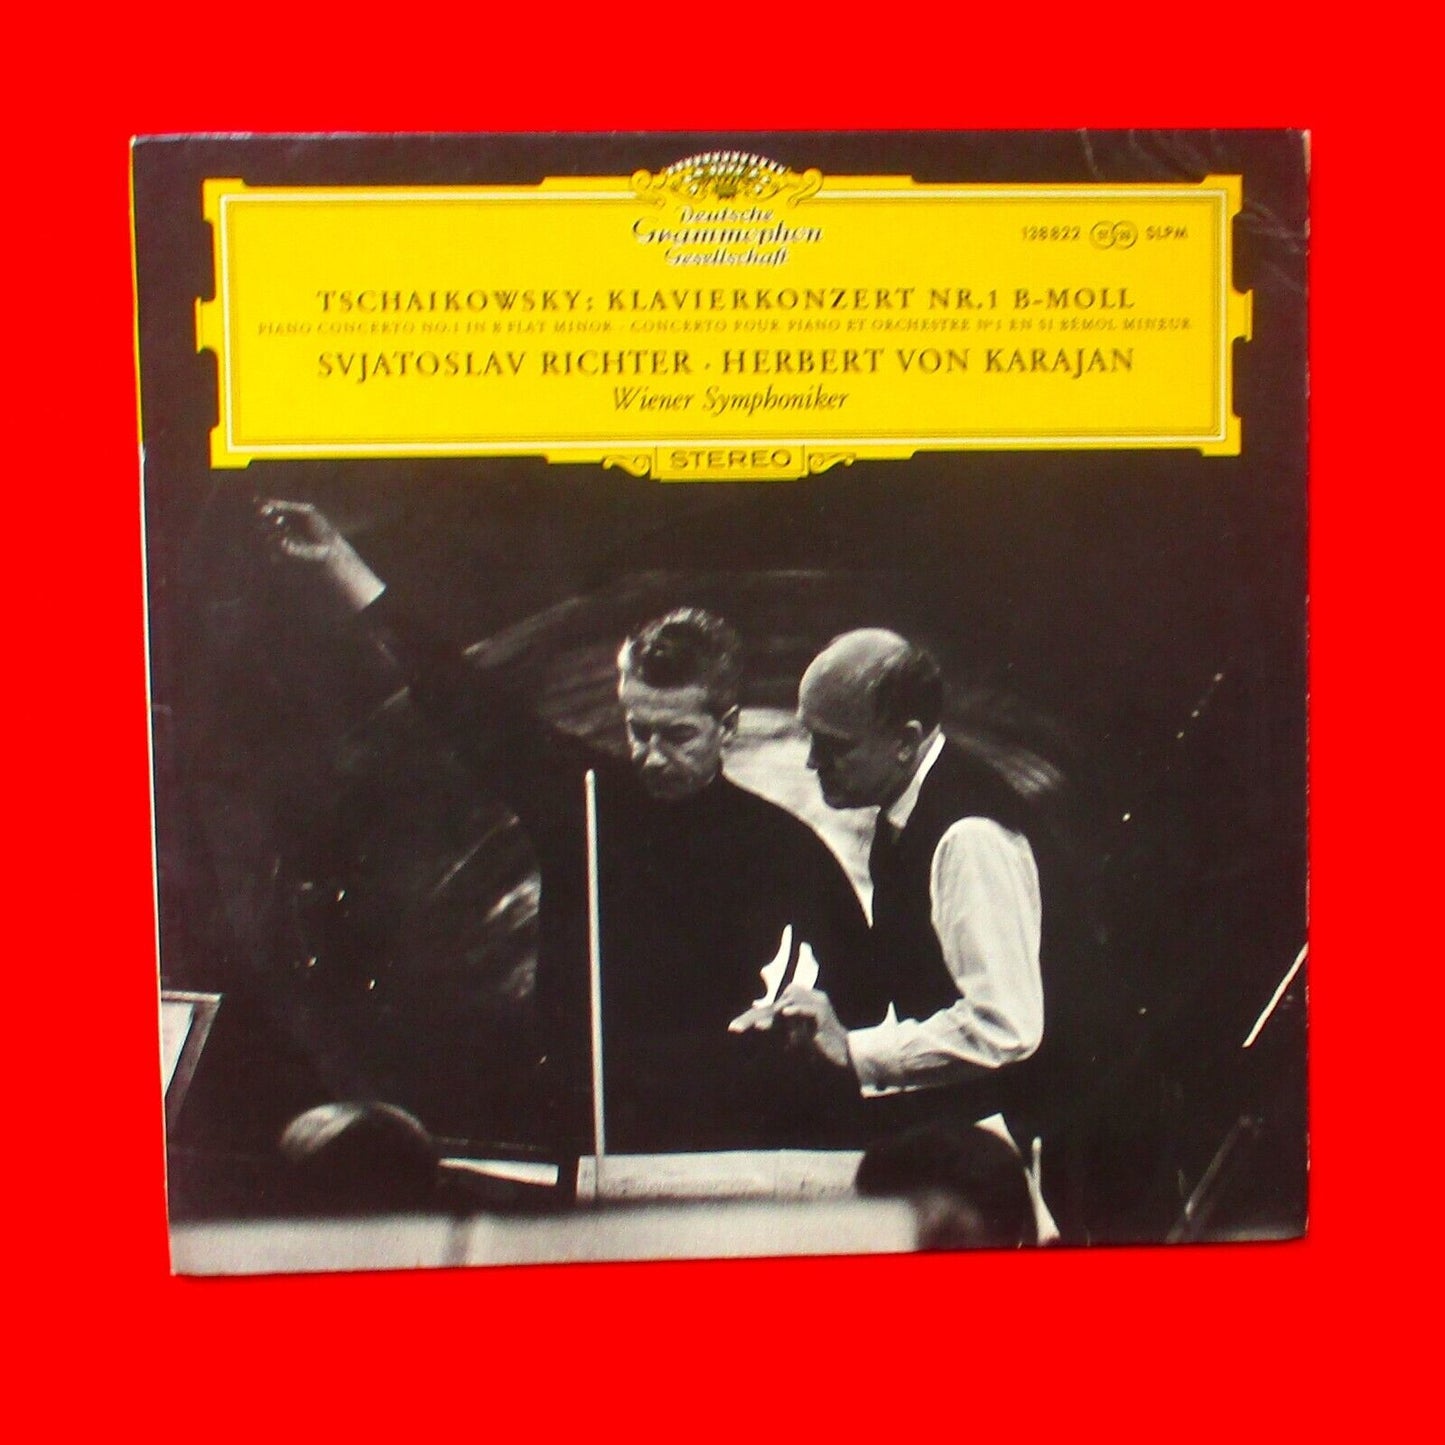 Tchaikovsky Richter Karajan  Klavierkonzert Nr.1 B-moll Piano Concerto No. 1 LP